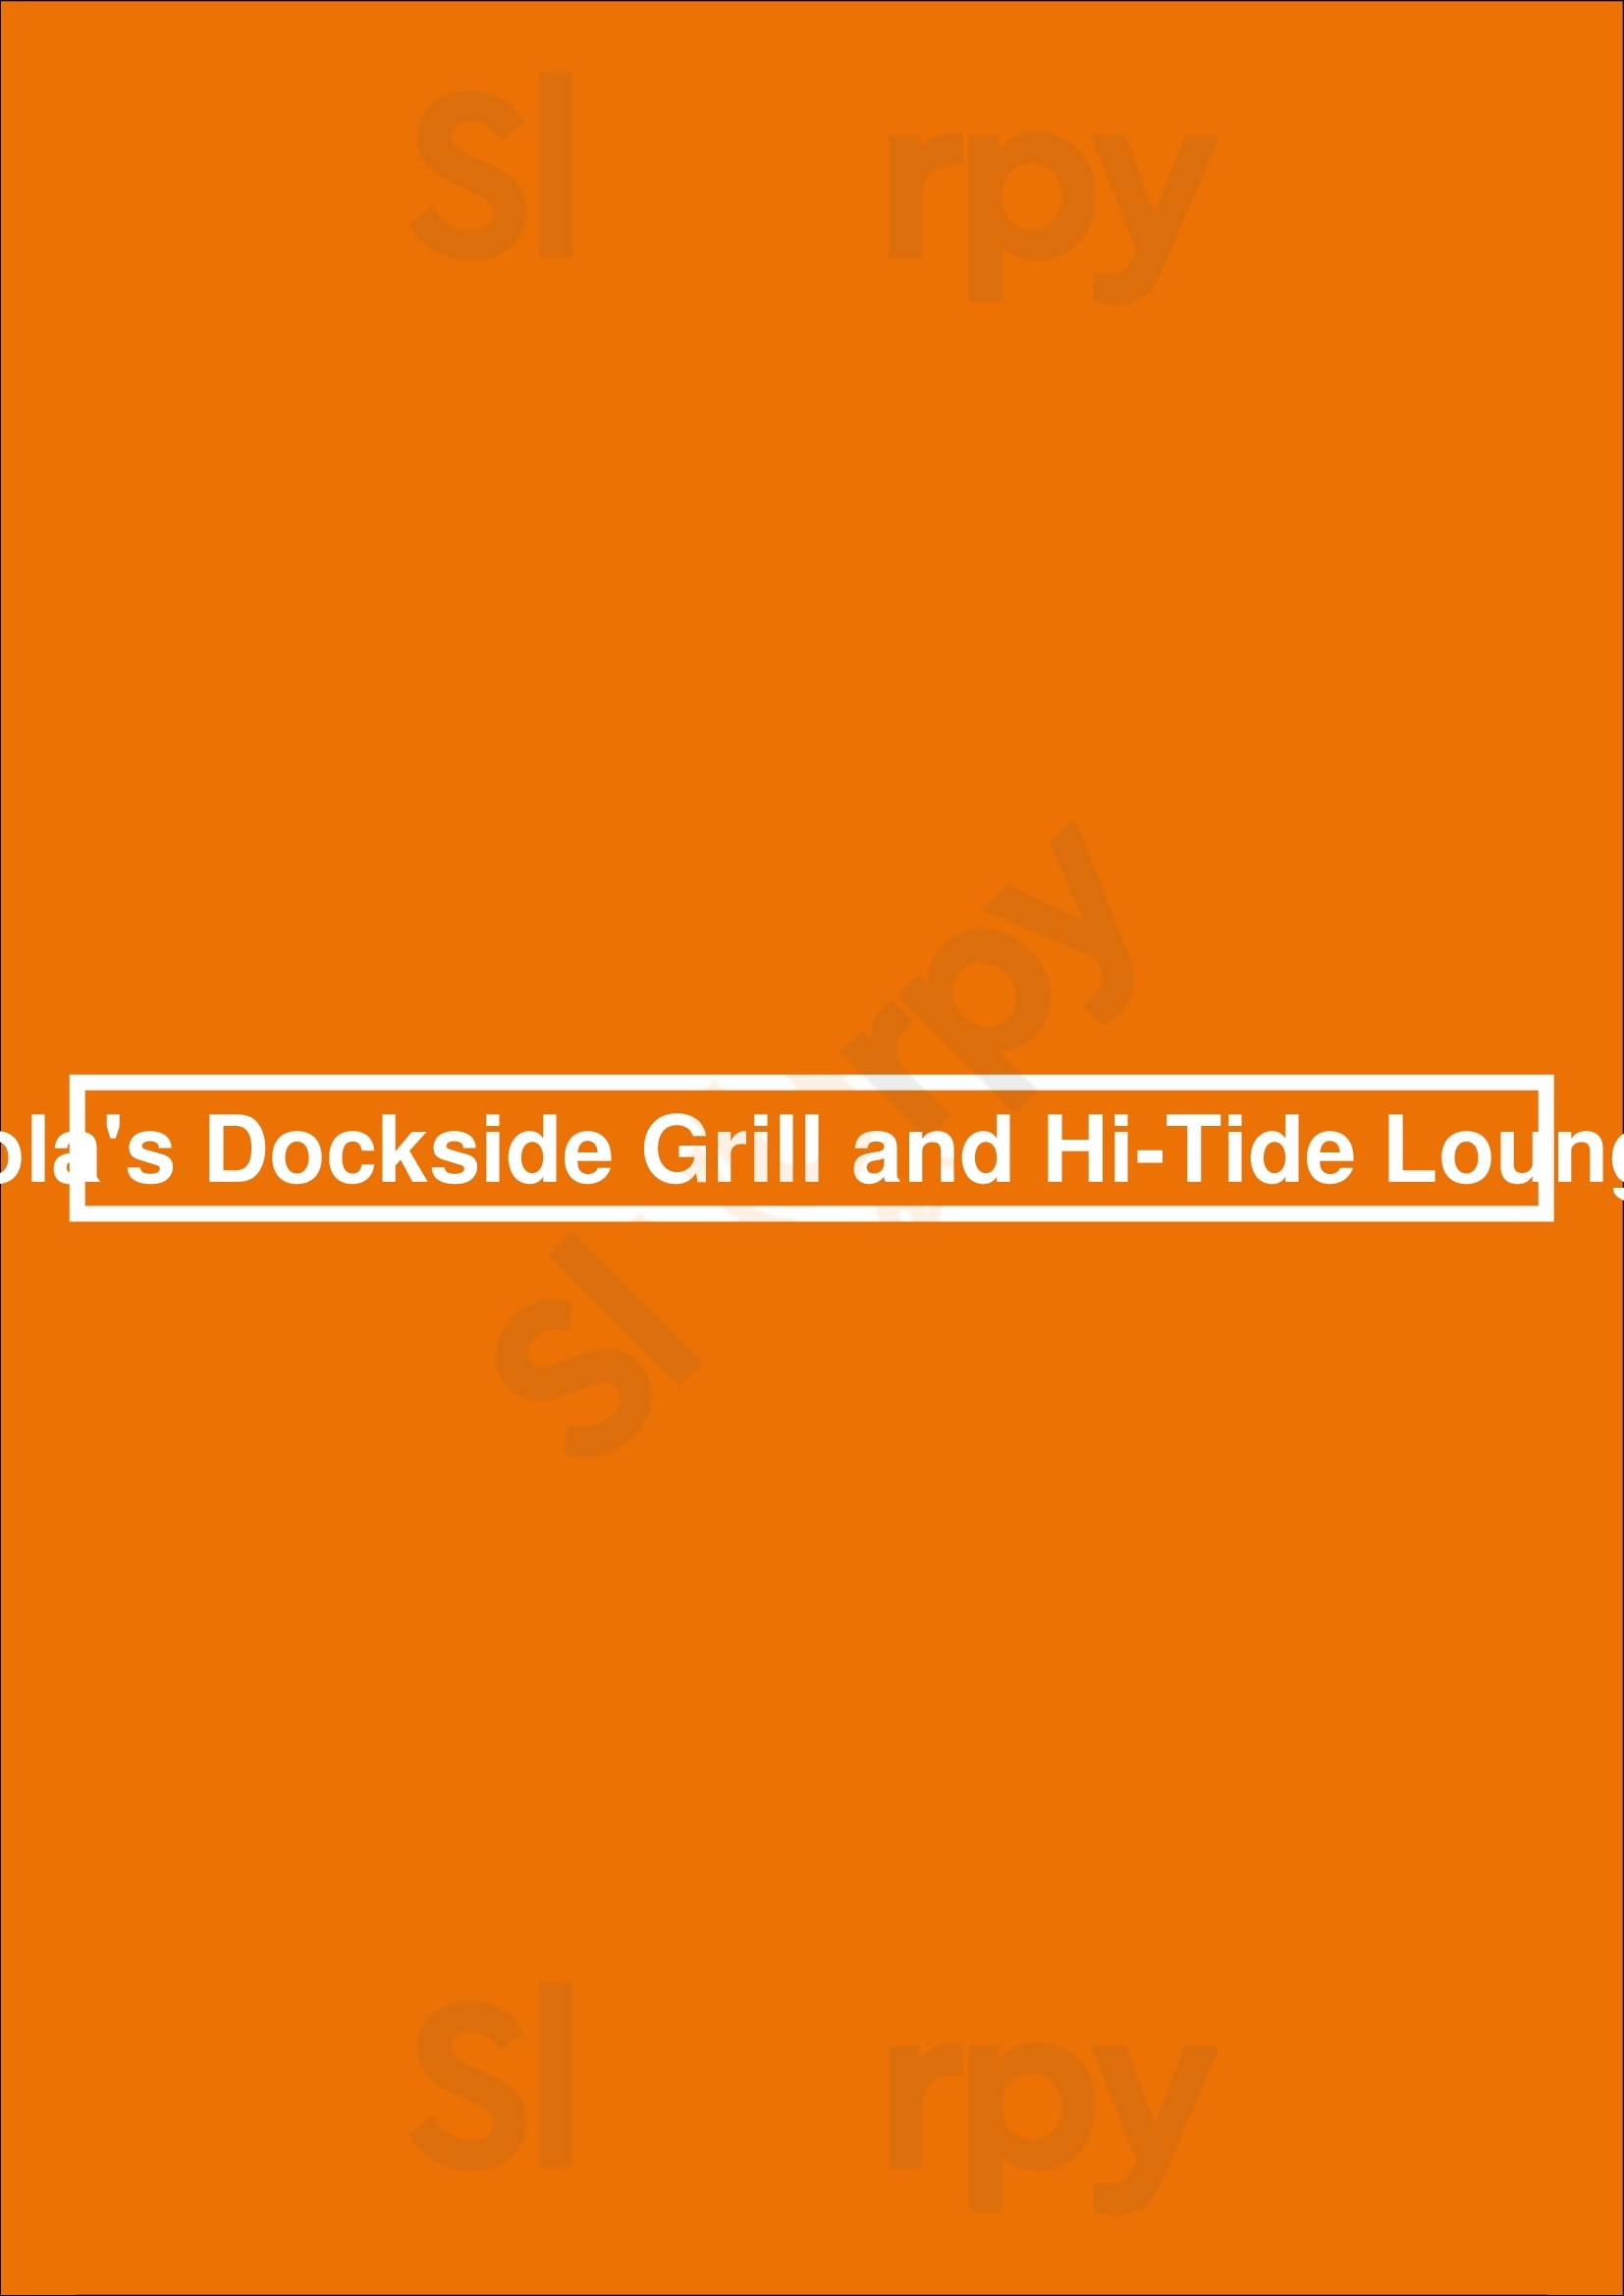 Vola's Dockside Grill And Hi-tide Lounge Alexandria Menu - 1